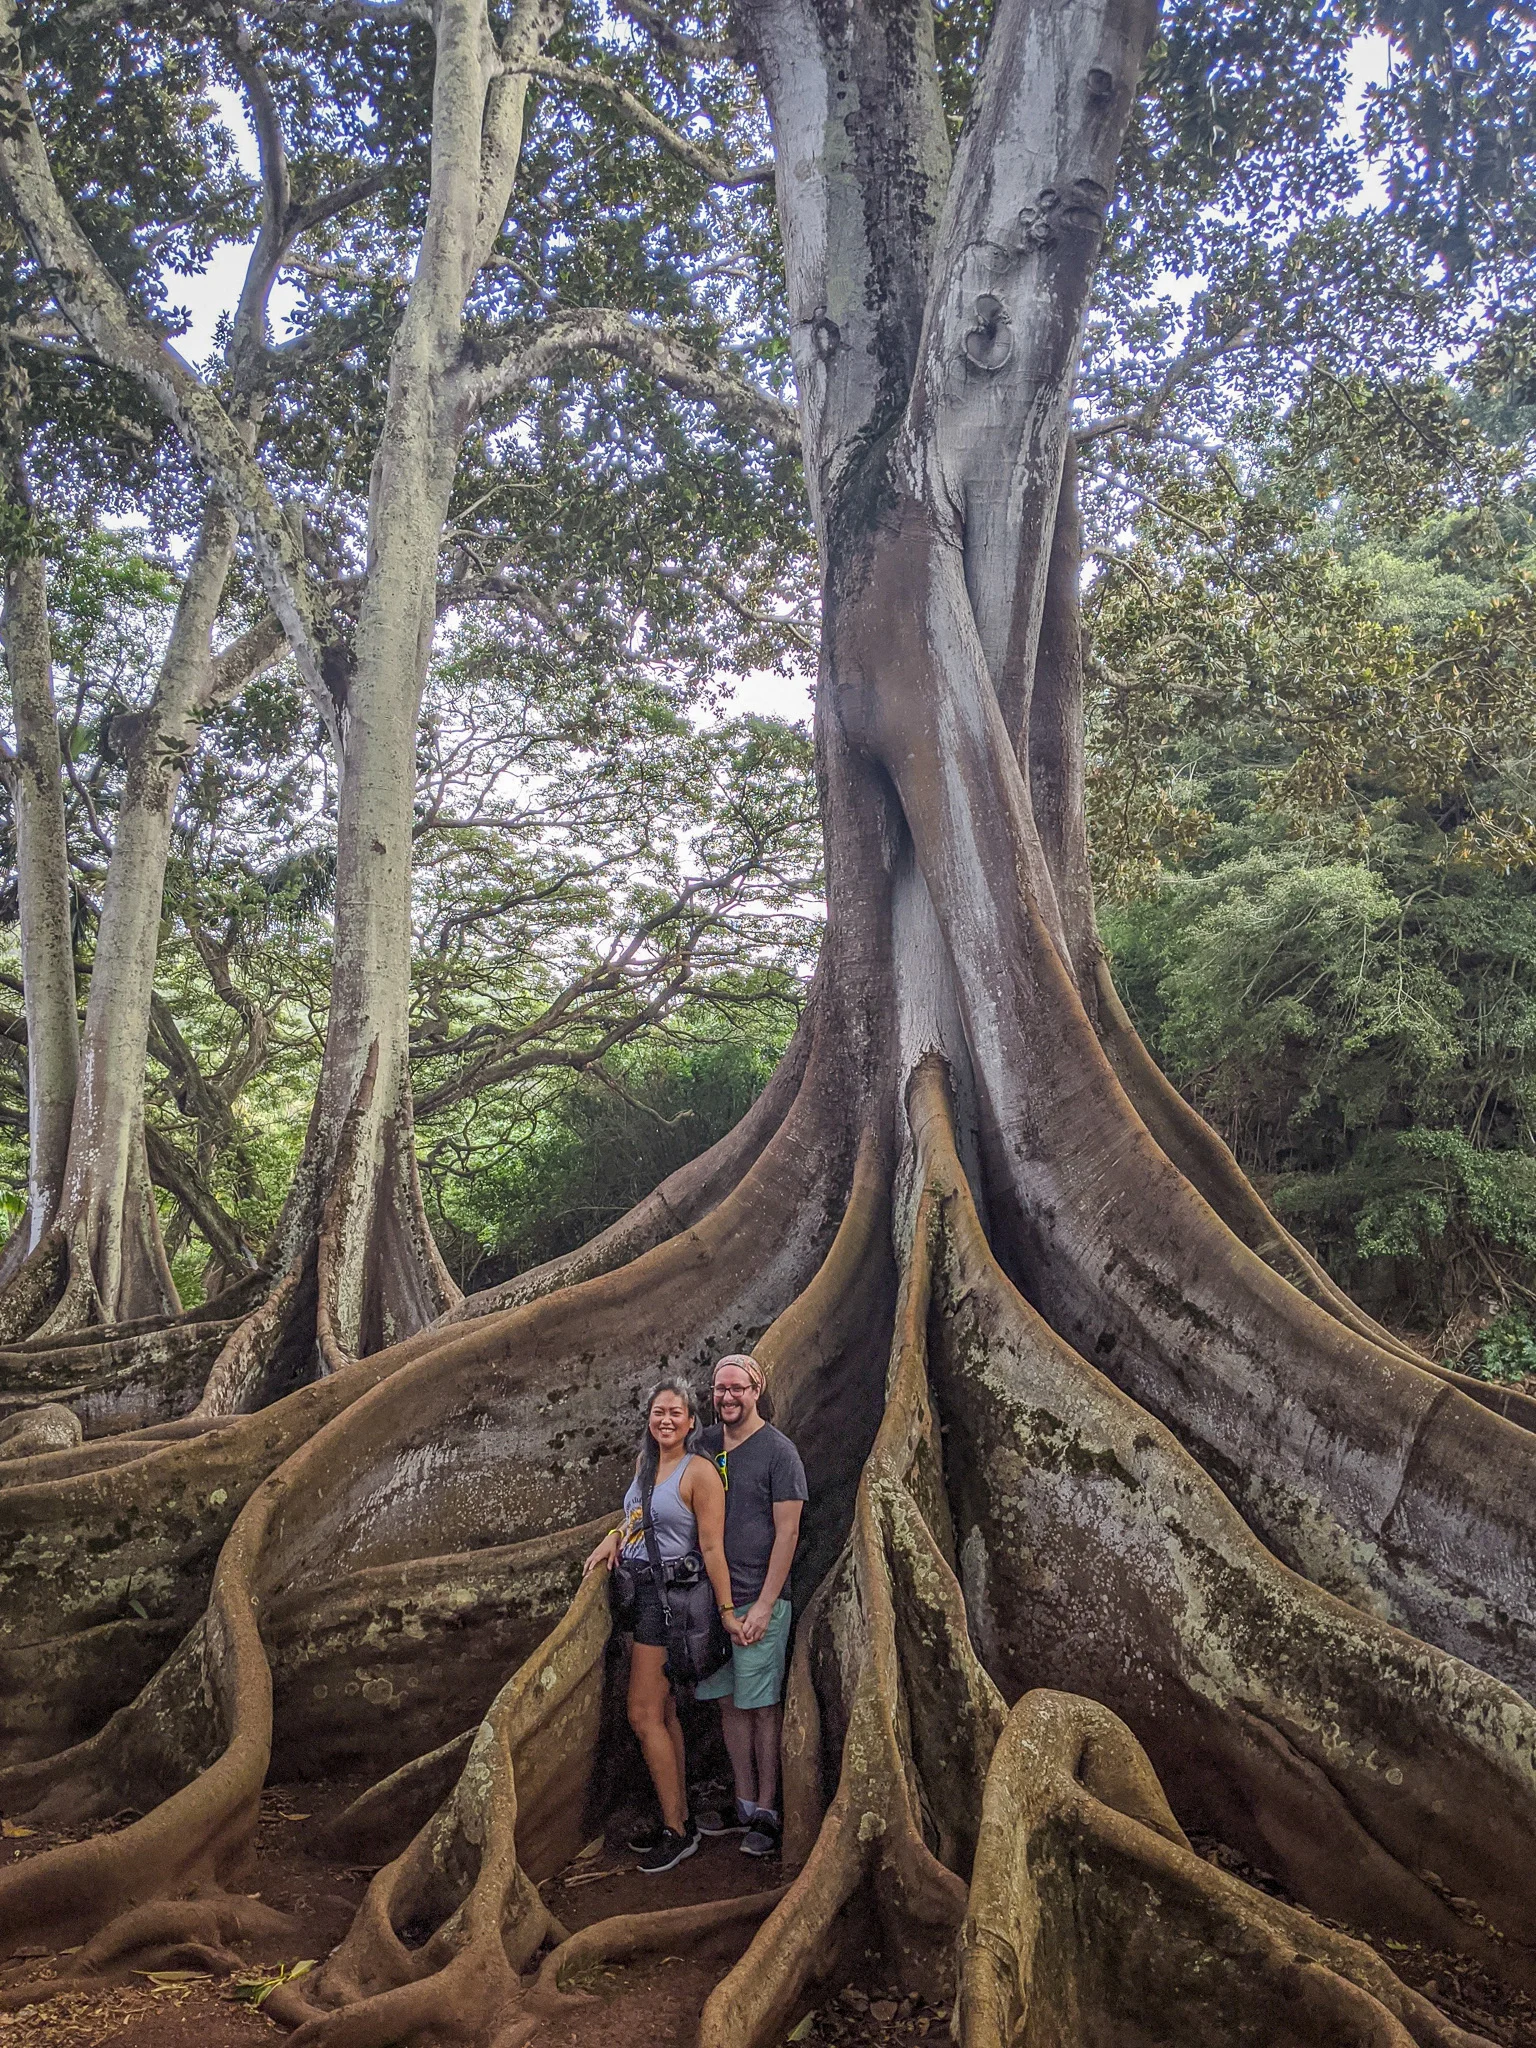 Moreton Bay Fig Jurassic Park Trees in Allerton Gardens Kauai Hawaii